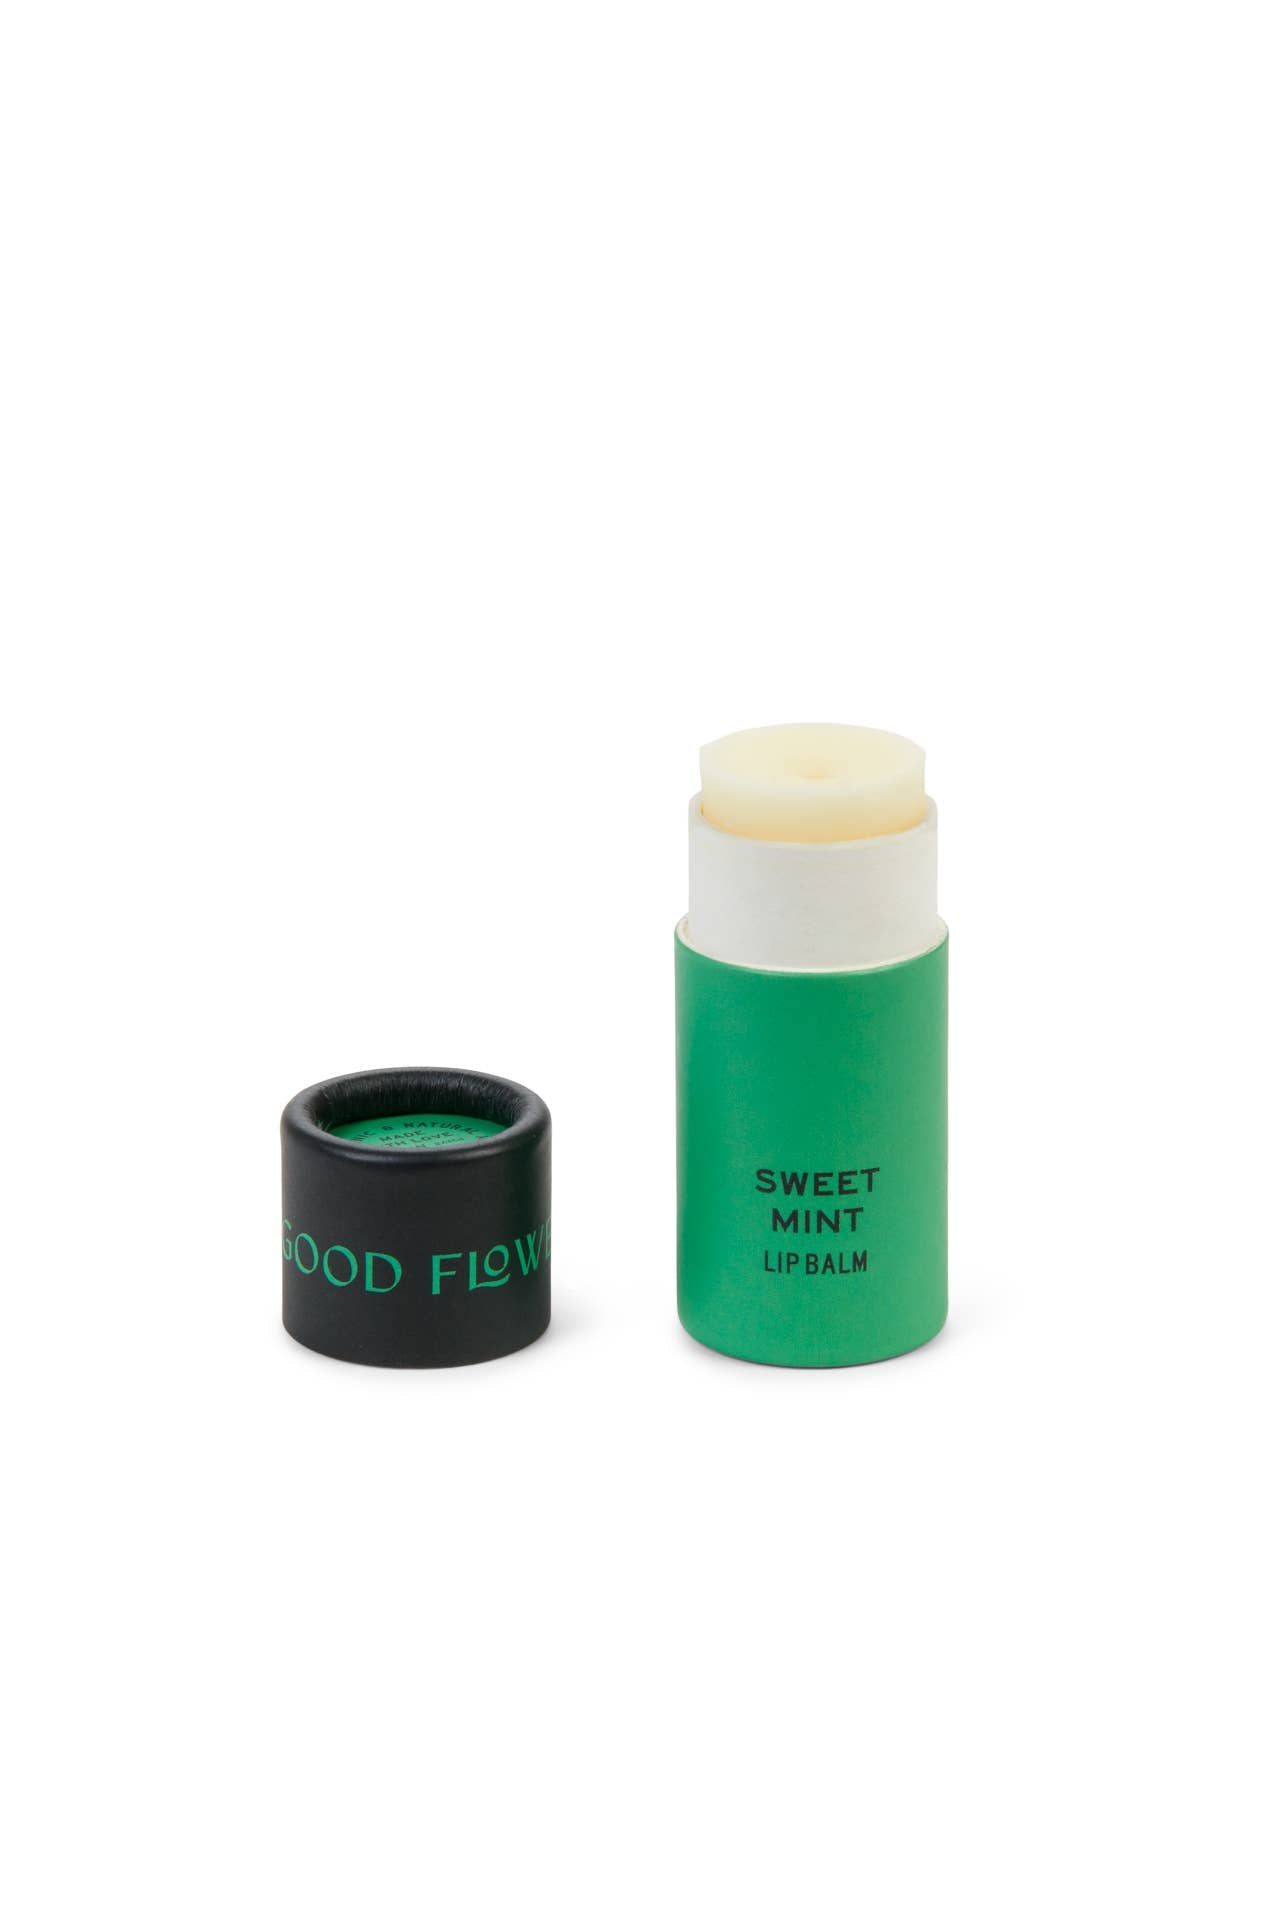 Good Flower Farm - NEW! Sweet Mint Organic Lip Balm / 0.3 oz Biodegradable Tube - Eventide Botanical Wellness